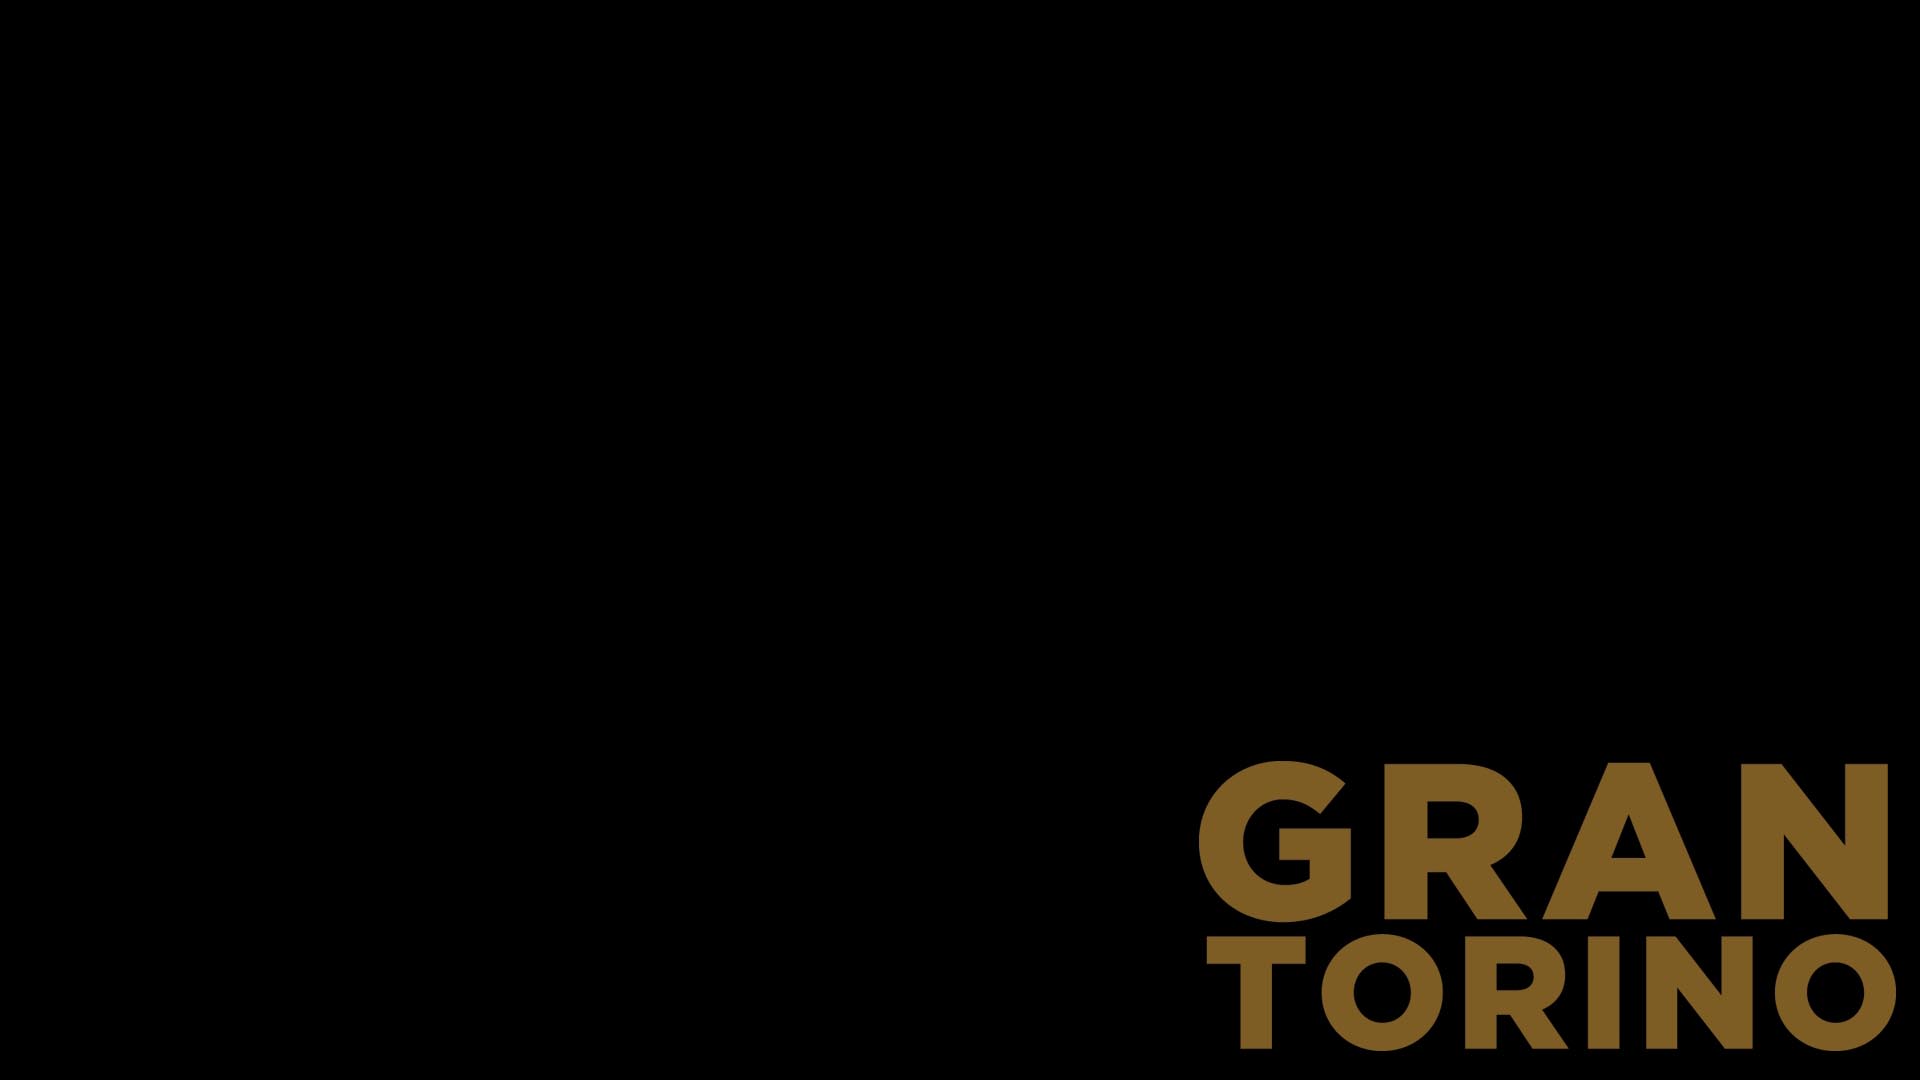 Movie Gran Torino HD Wallpaper | Background Image